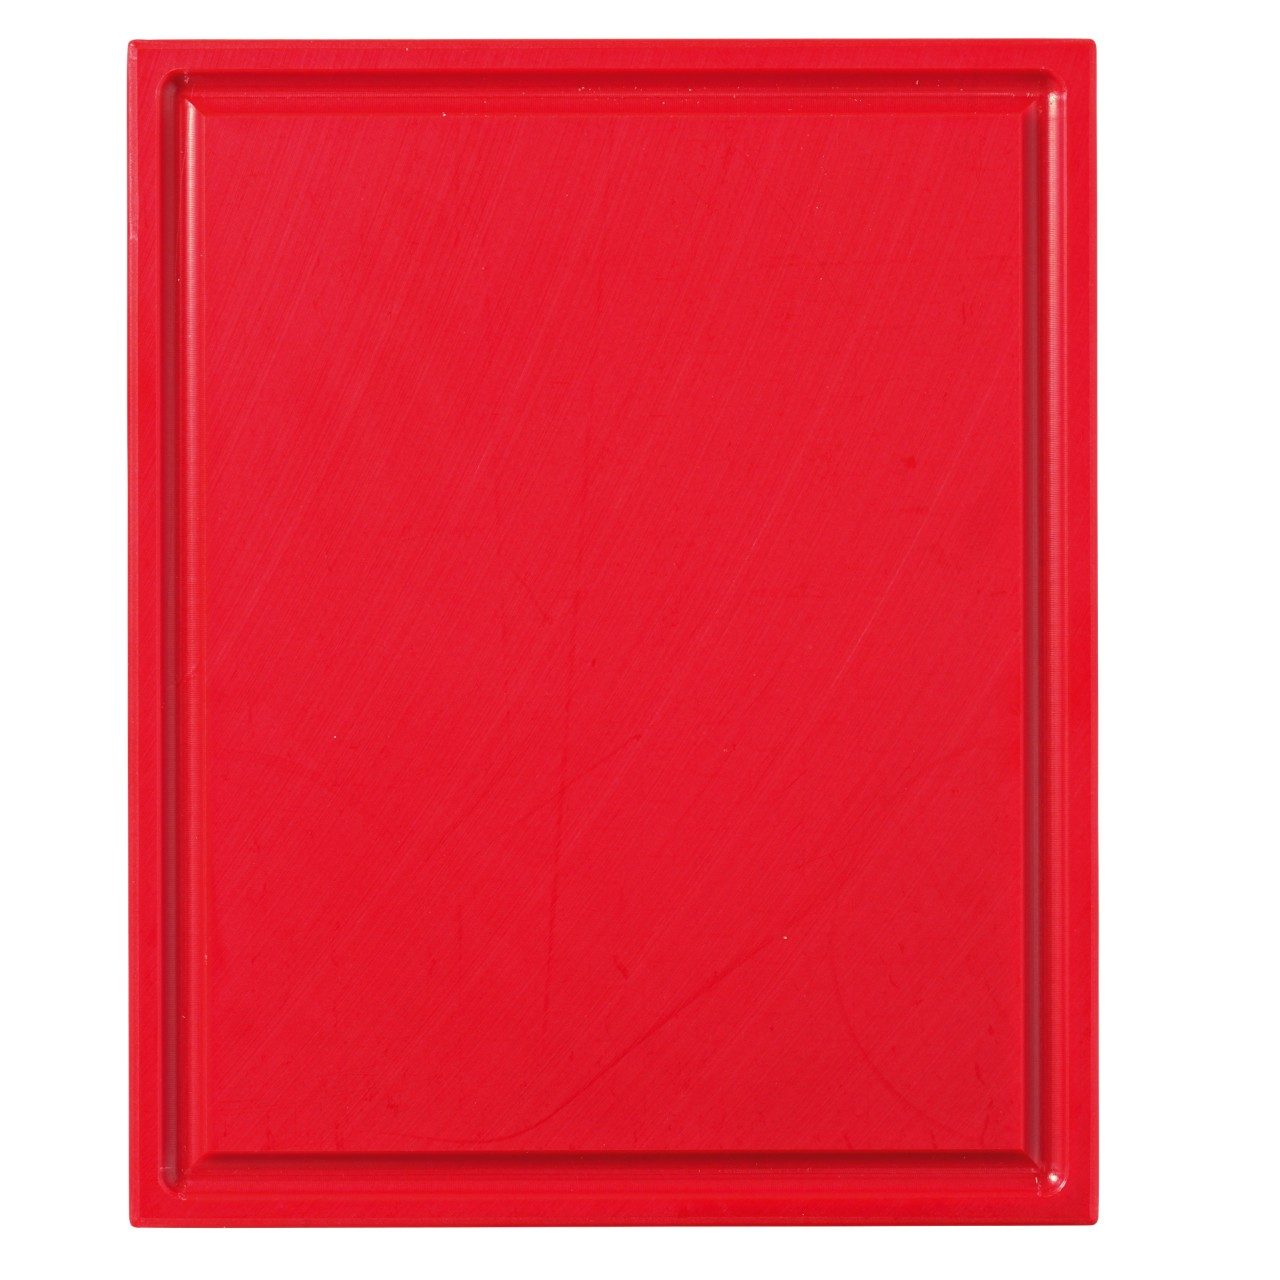 Snijplank met sapgeul, 1/2 GN rood, 325 x 265 x 15 mm